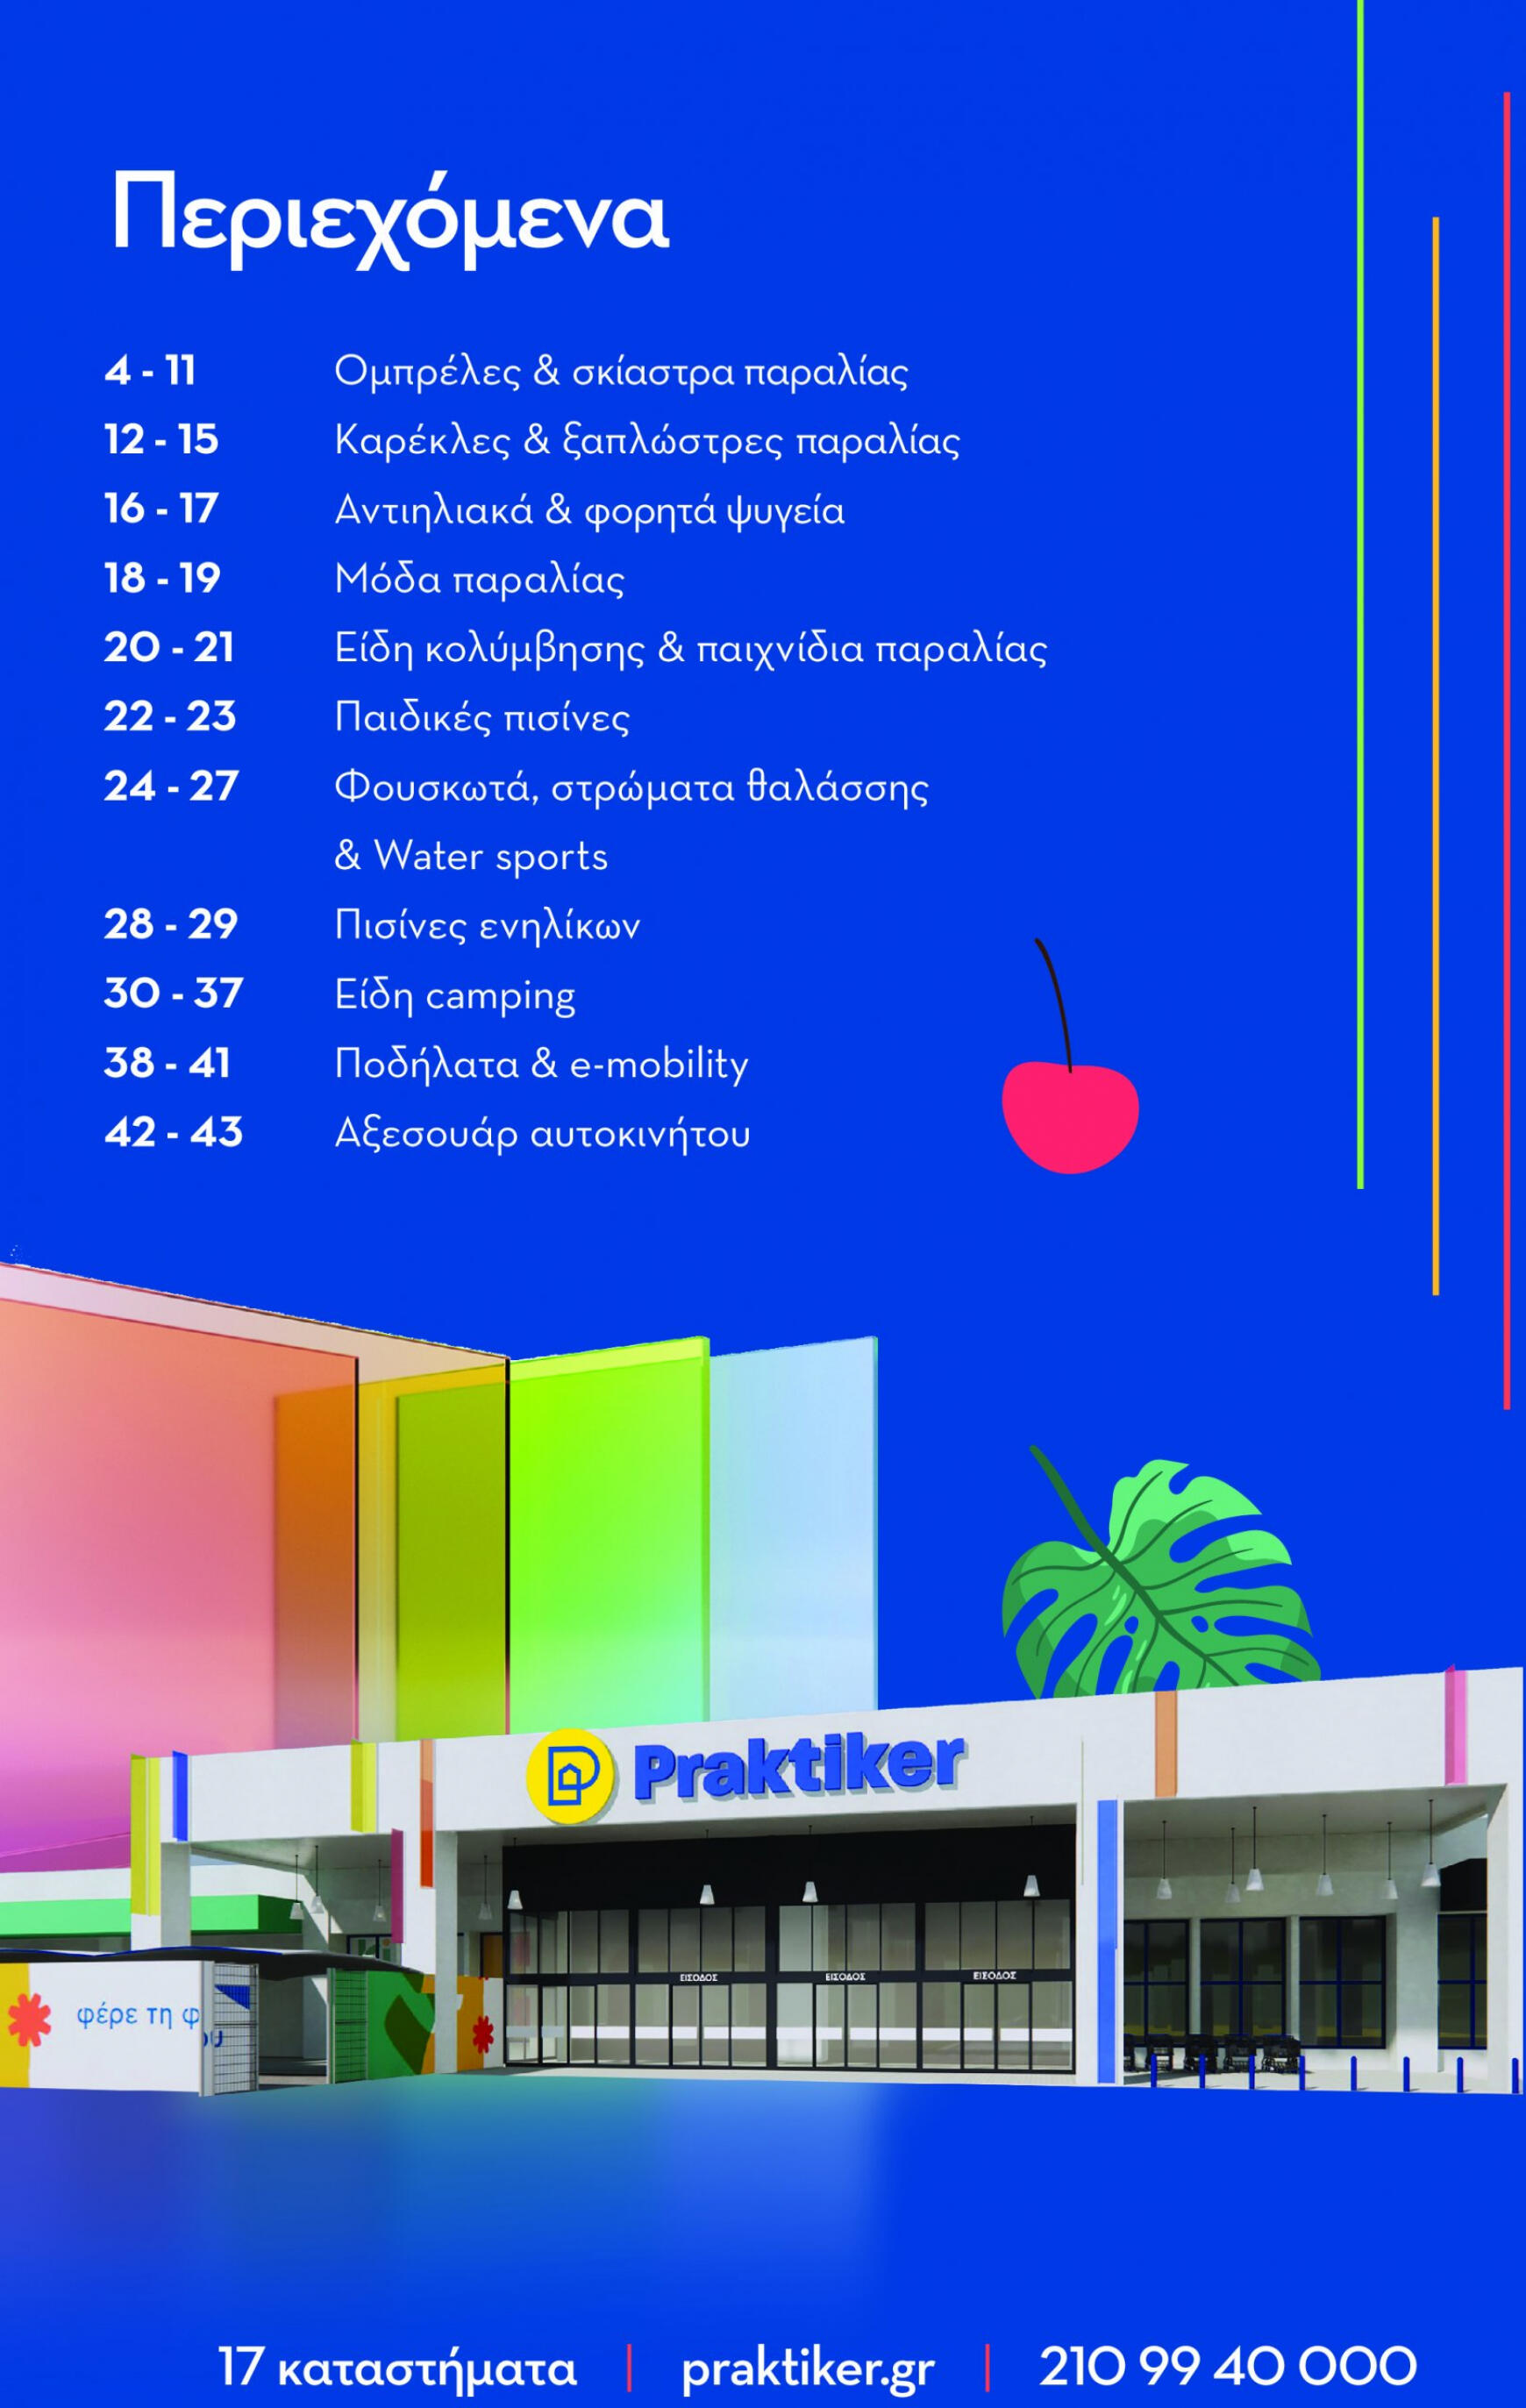 praktiker - Praktiker - Καλοκαιρινός Κατάλογος φυλλάδιο ρεύματος 10/06 - 31/08 - page: 3